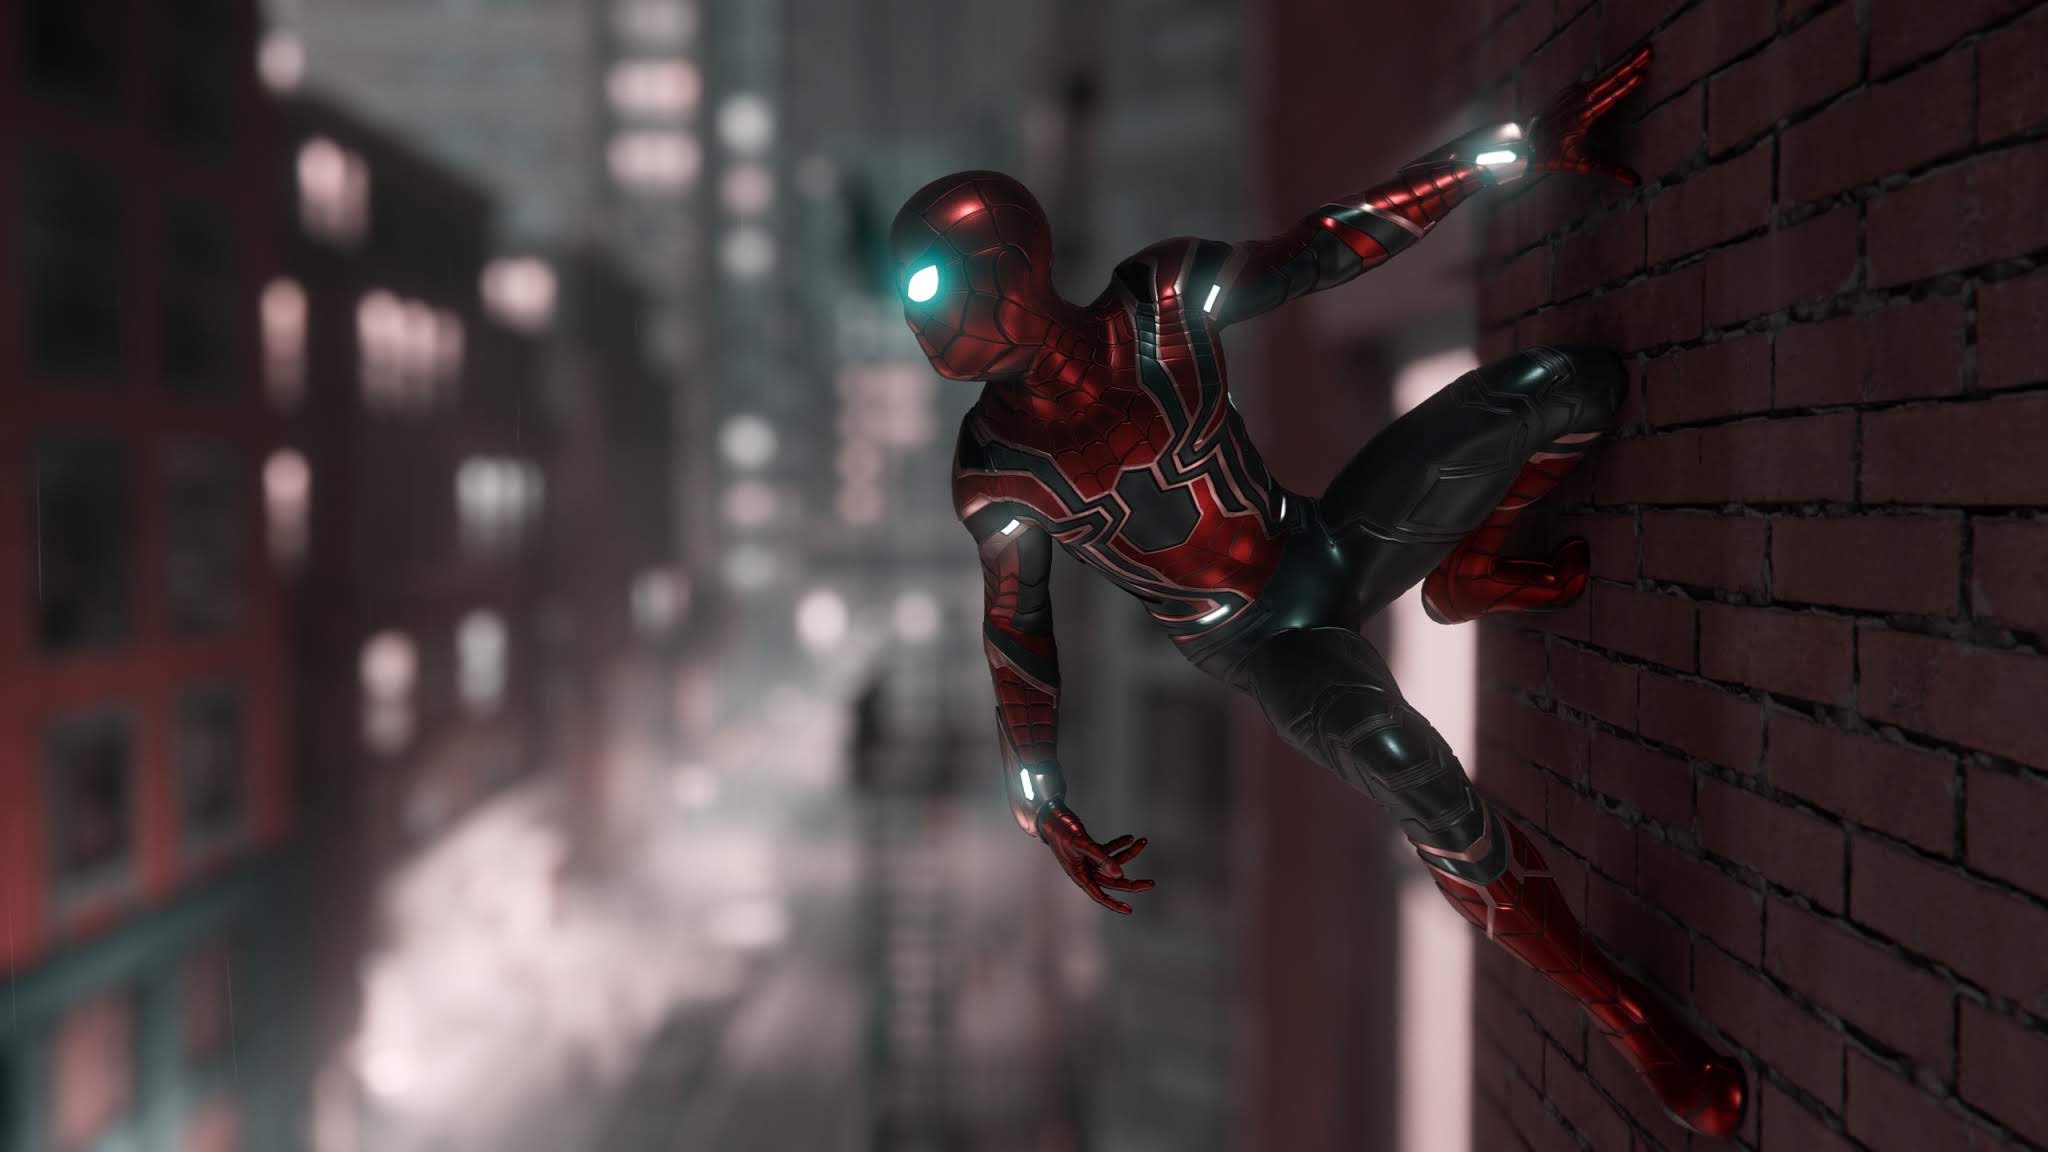 ps4 wallpaper,spider man,superhero,fictional character,screenshot